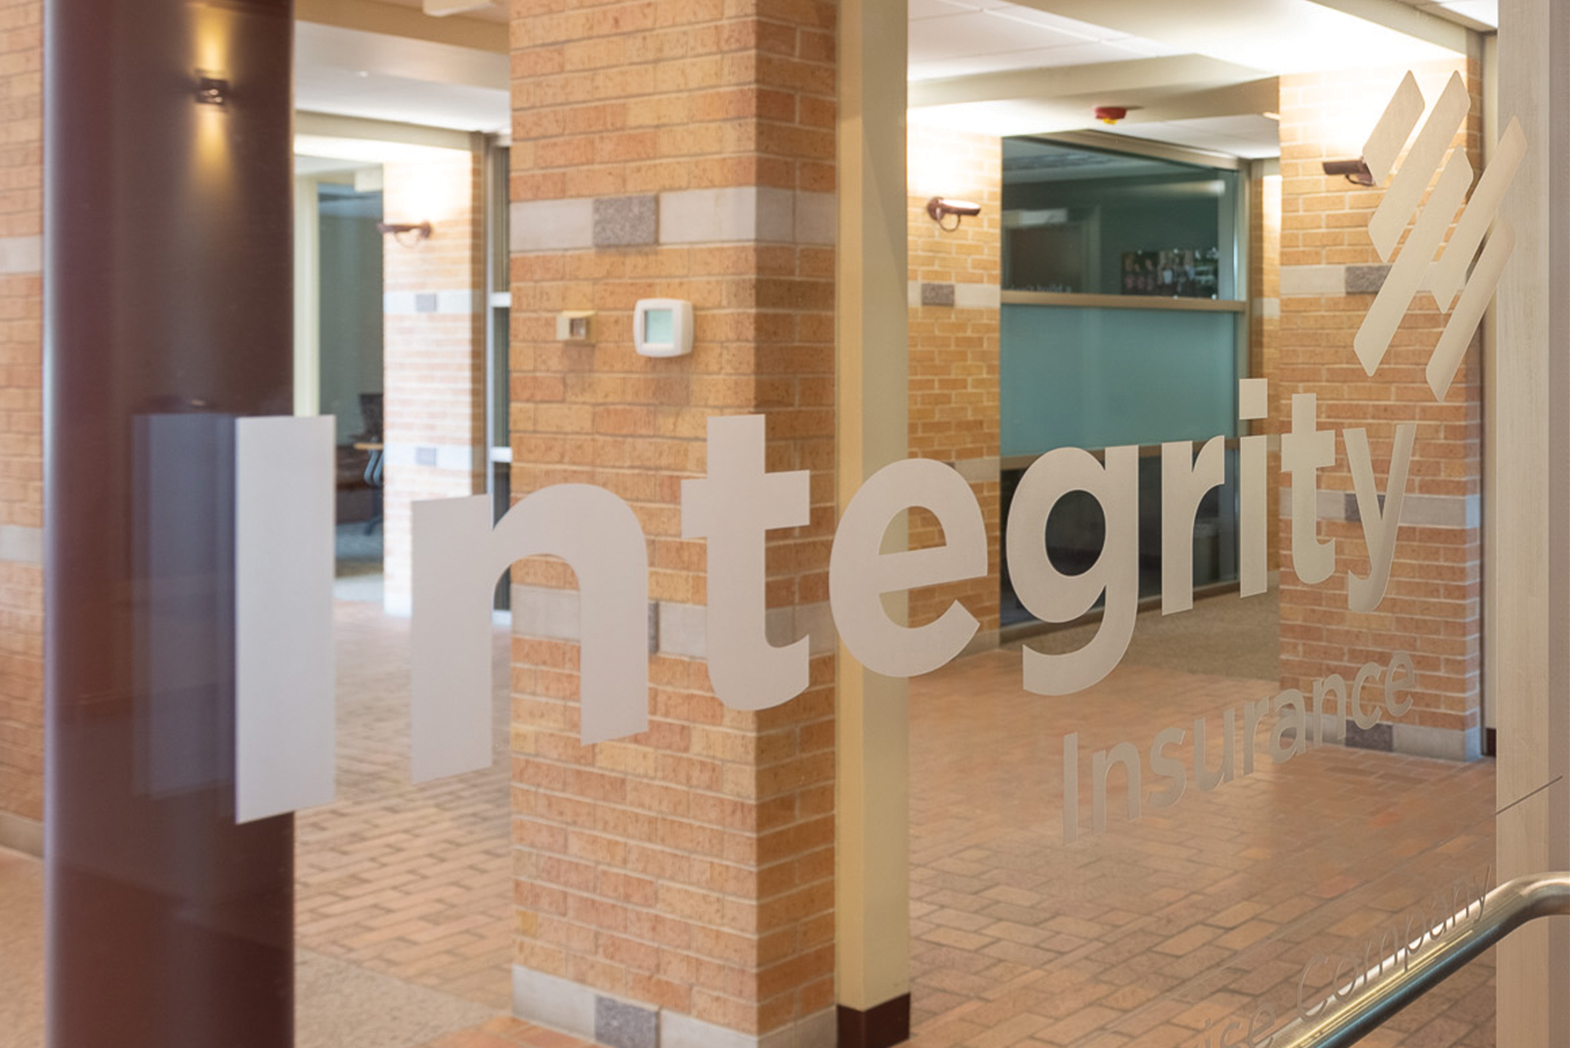 Integrity Insurance Office Entrance Door Window Vinyl Logo